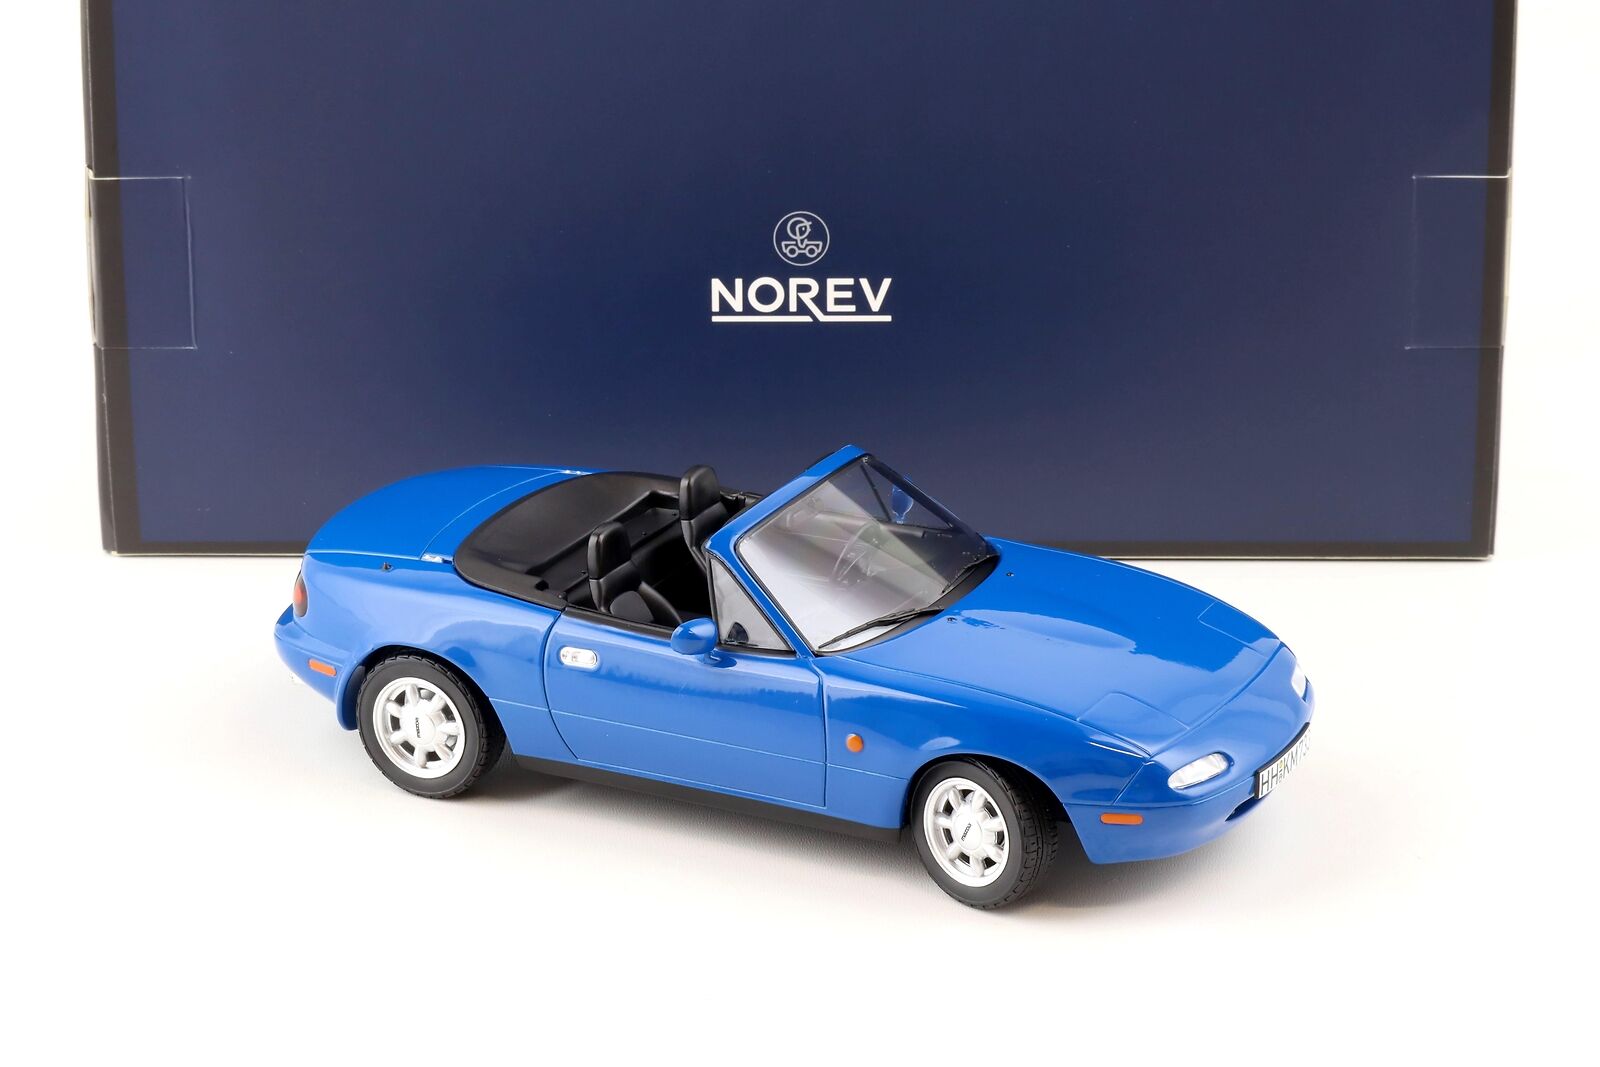  Norev 188022 Mazda MX-5 1989 Navy blau 1:18 Modellauto  limitiert 1/100